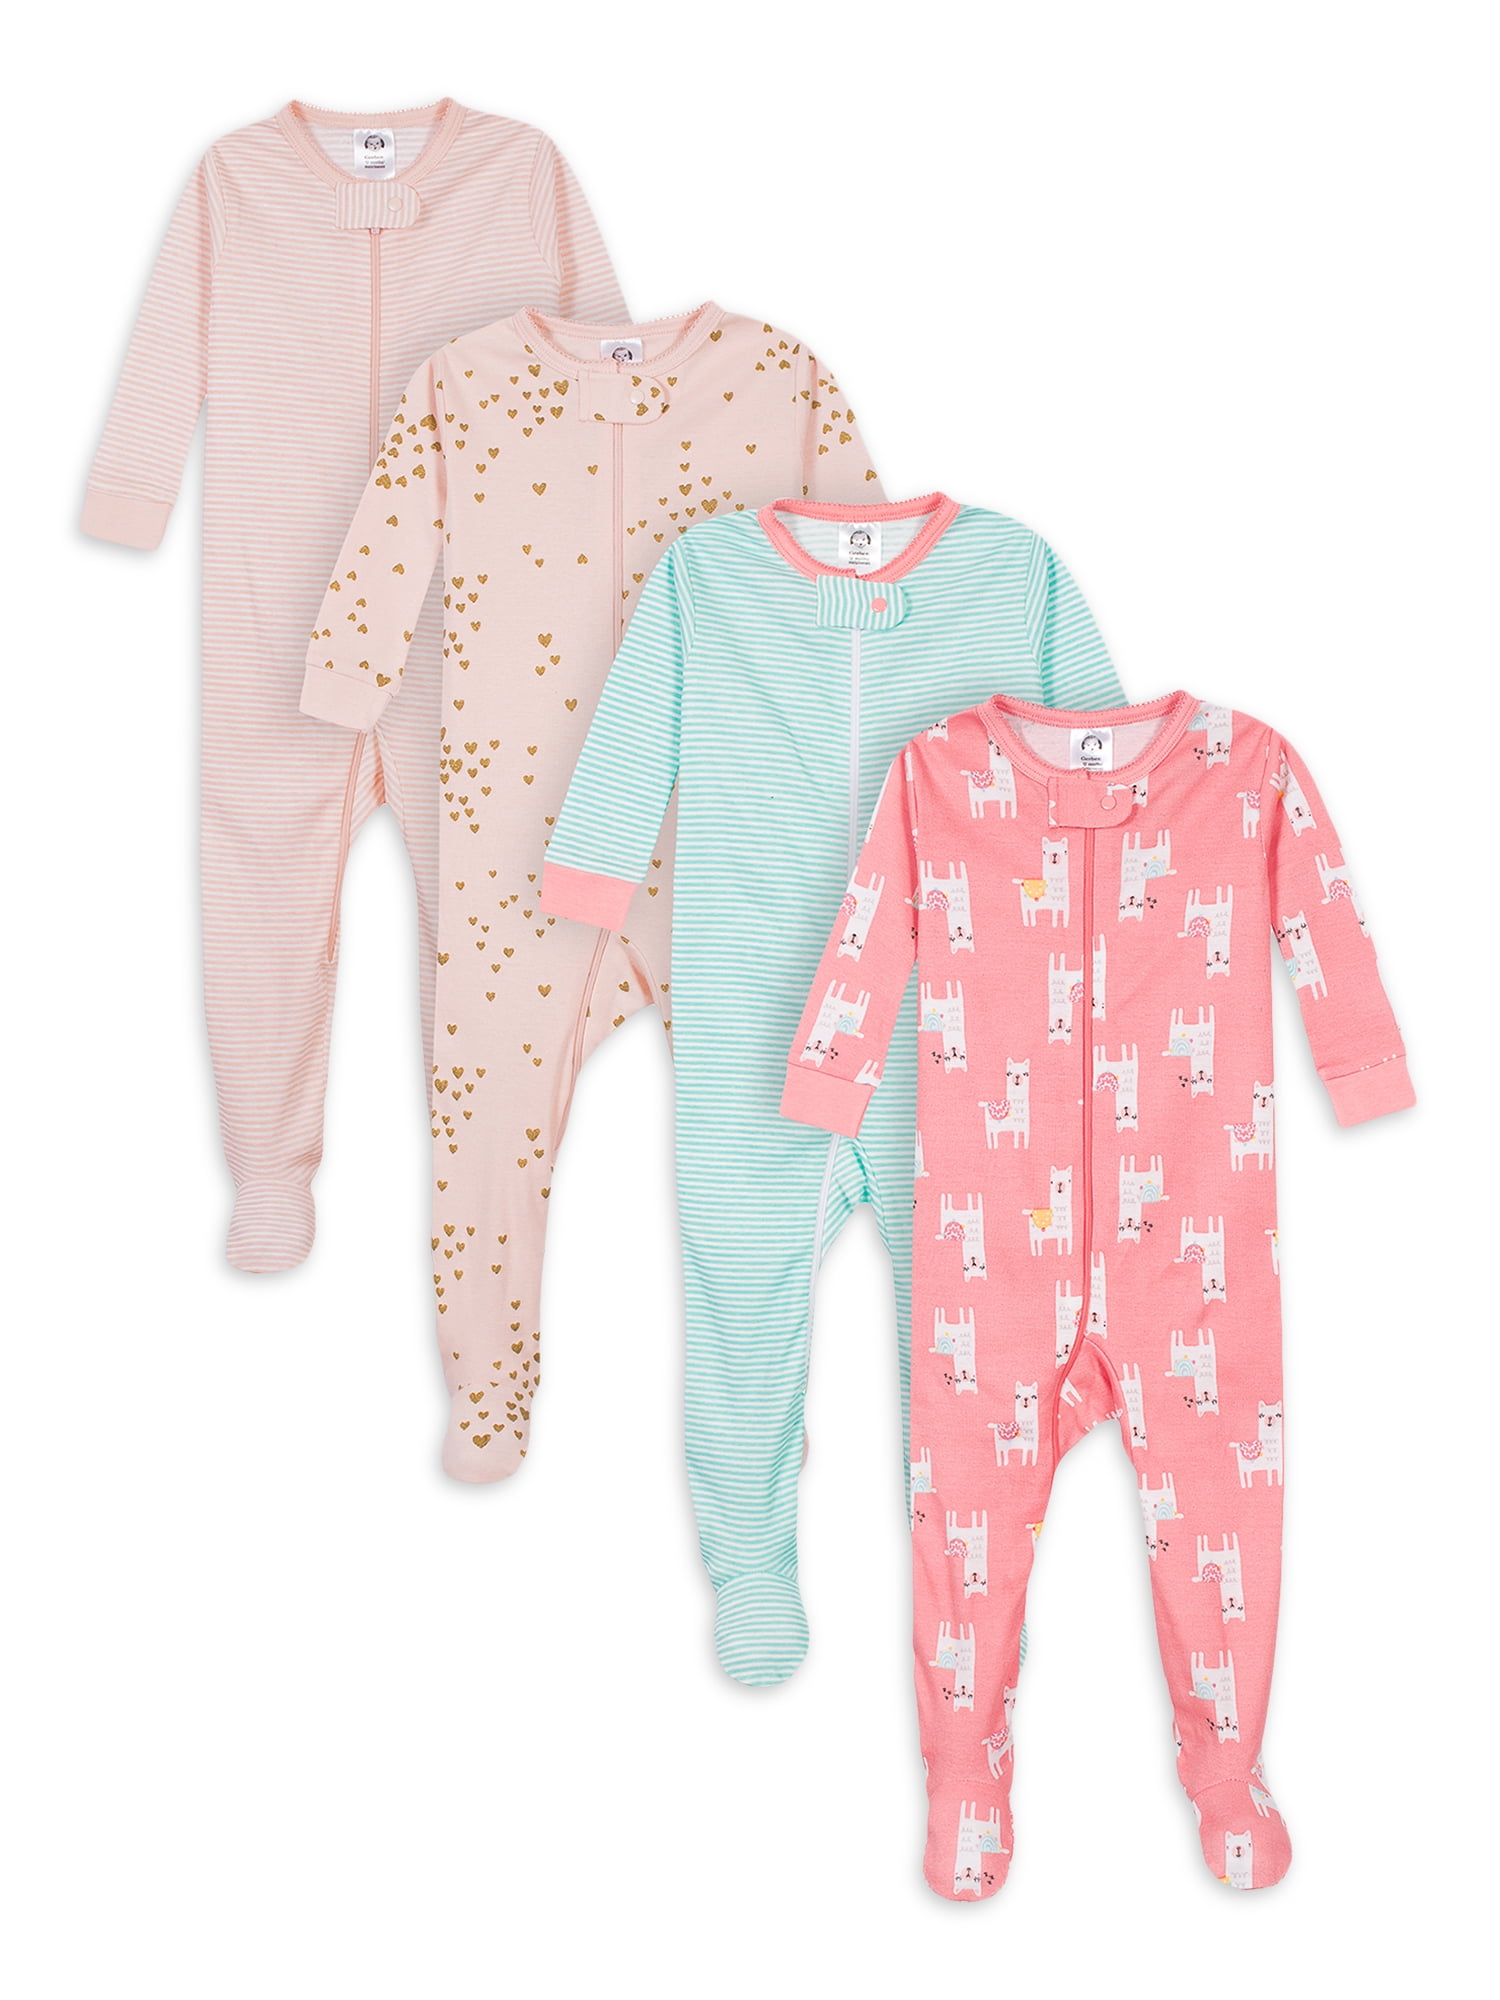 New Gerber Organic Cotton Footless Pajama PJs 1 pc Baby Girl Sleeper 12M 